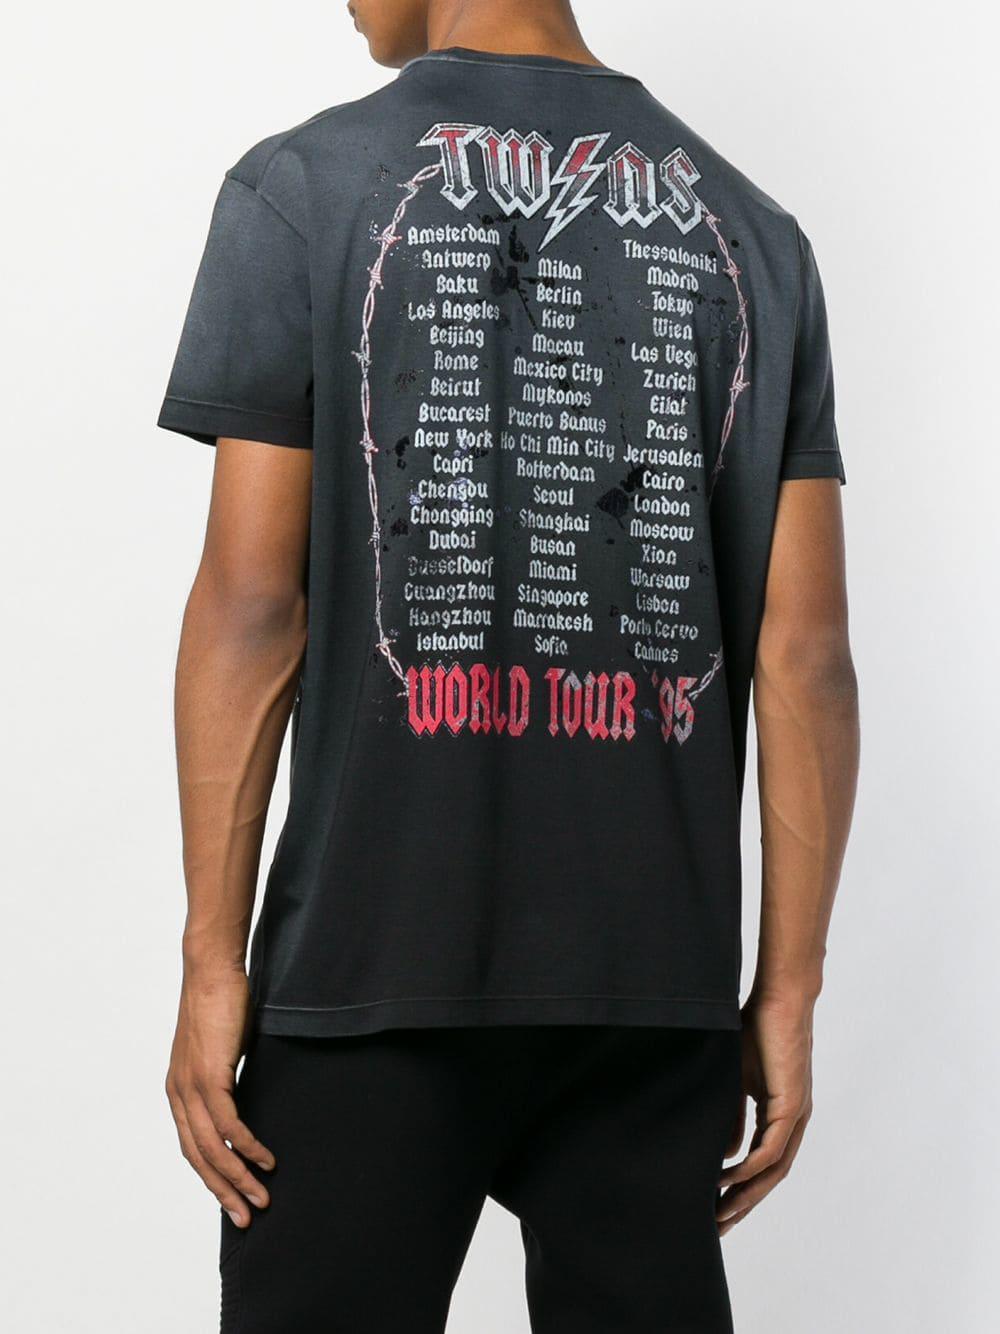 DSquared² Cotton Rock Skull Tour T-shirt in Black for Men - Lyst